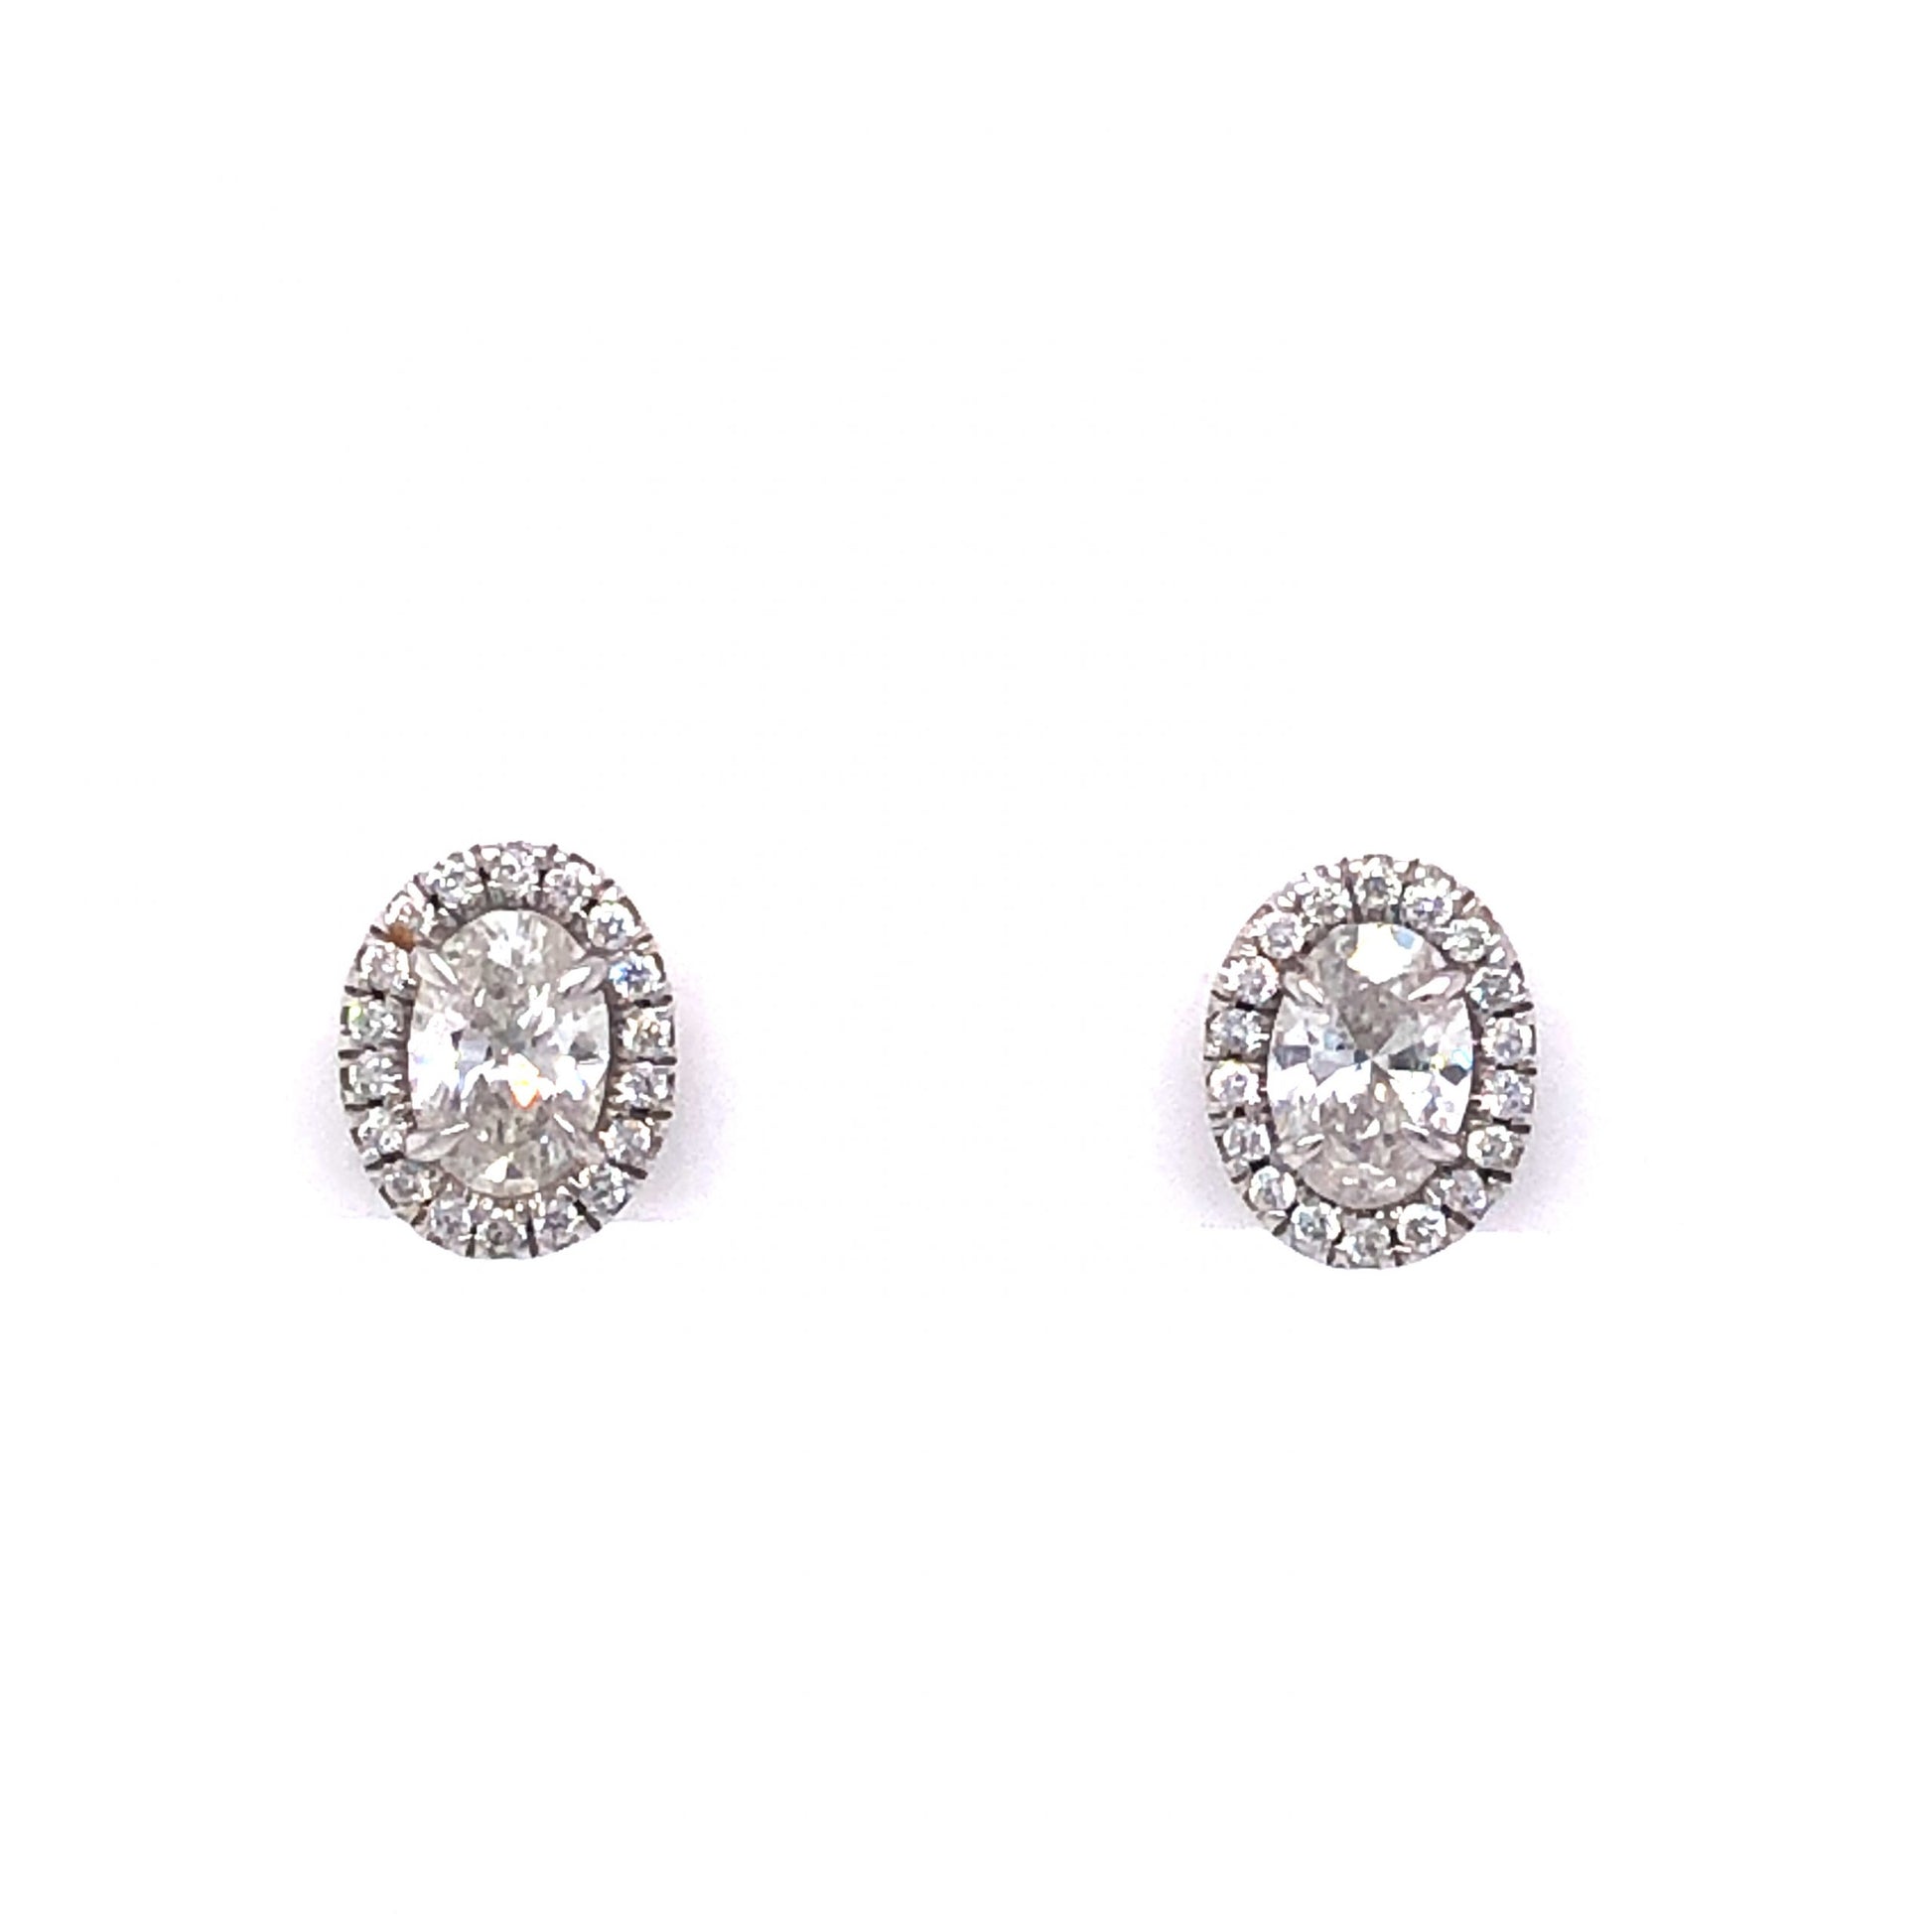 Diamond Halo Earring Studs in 18k White Gold